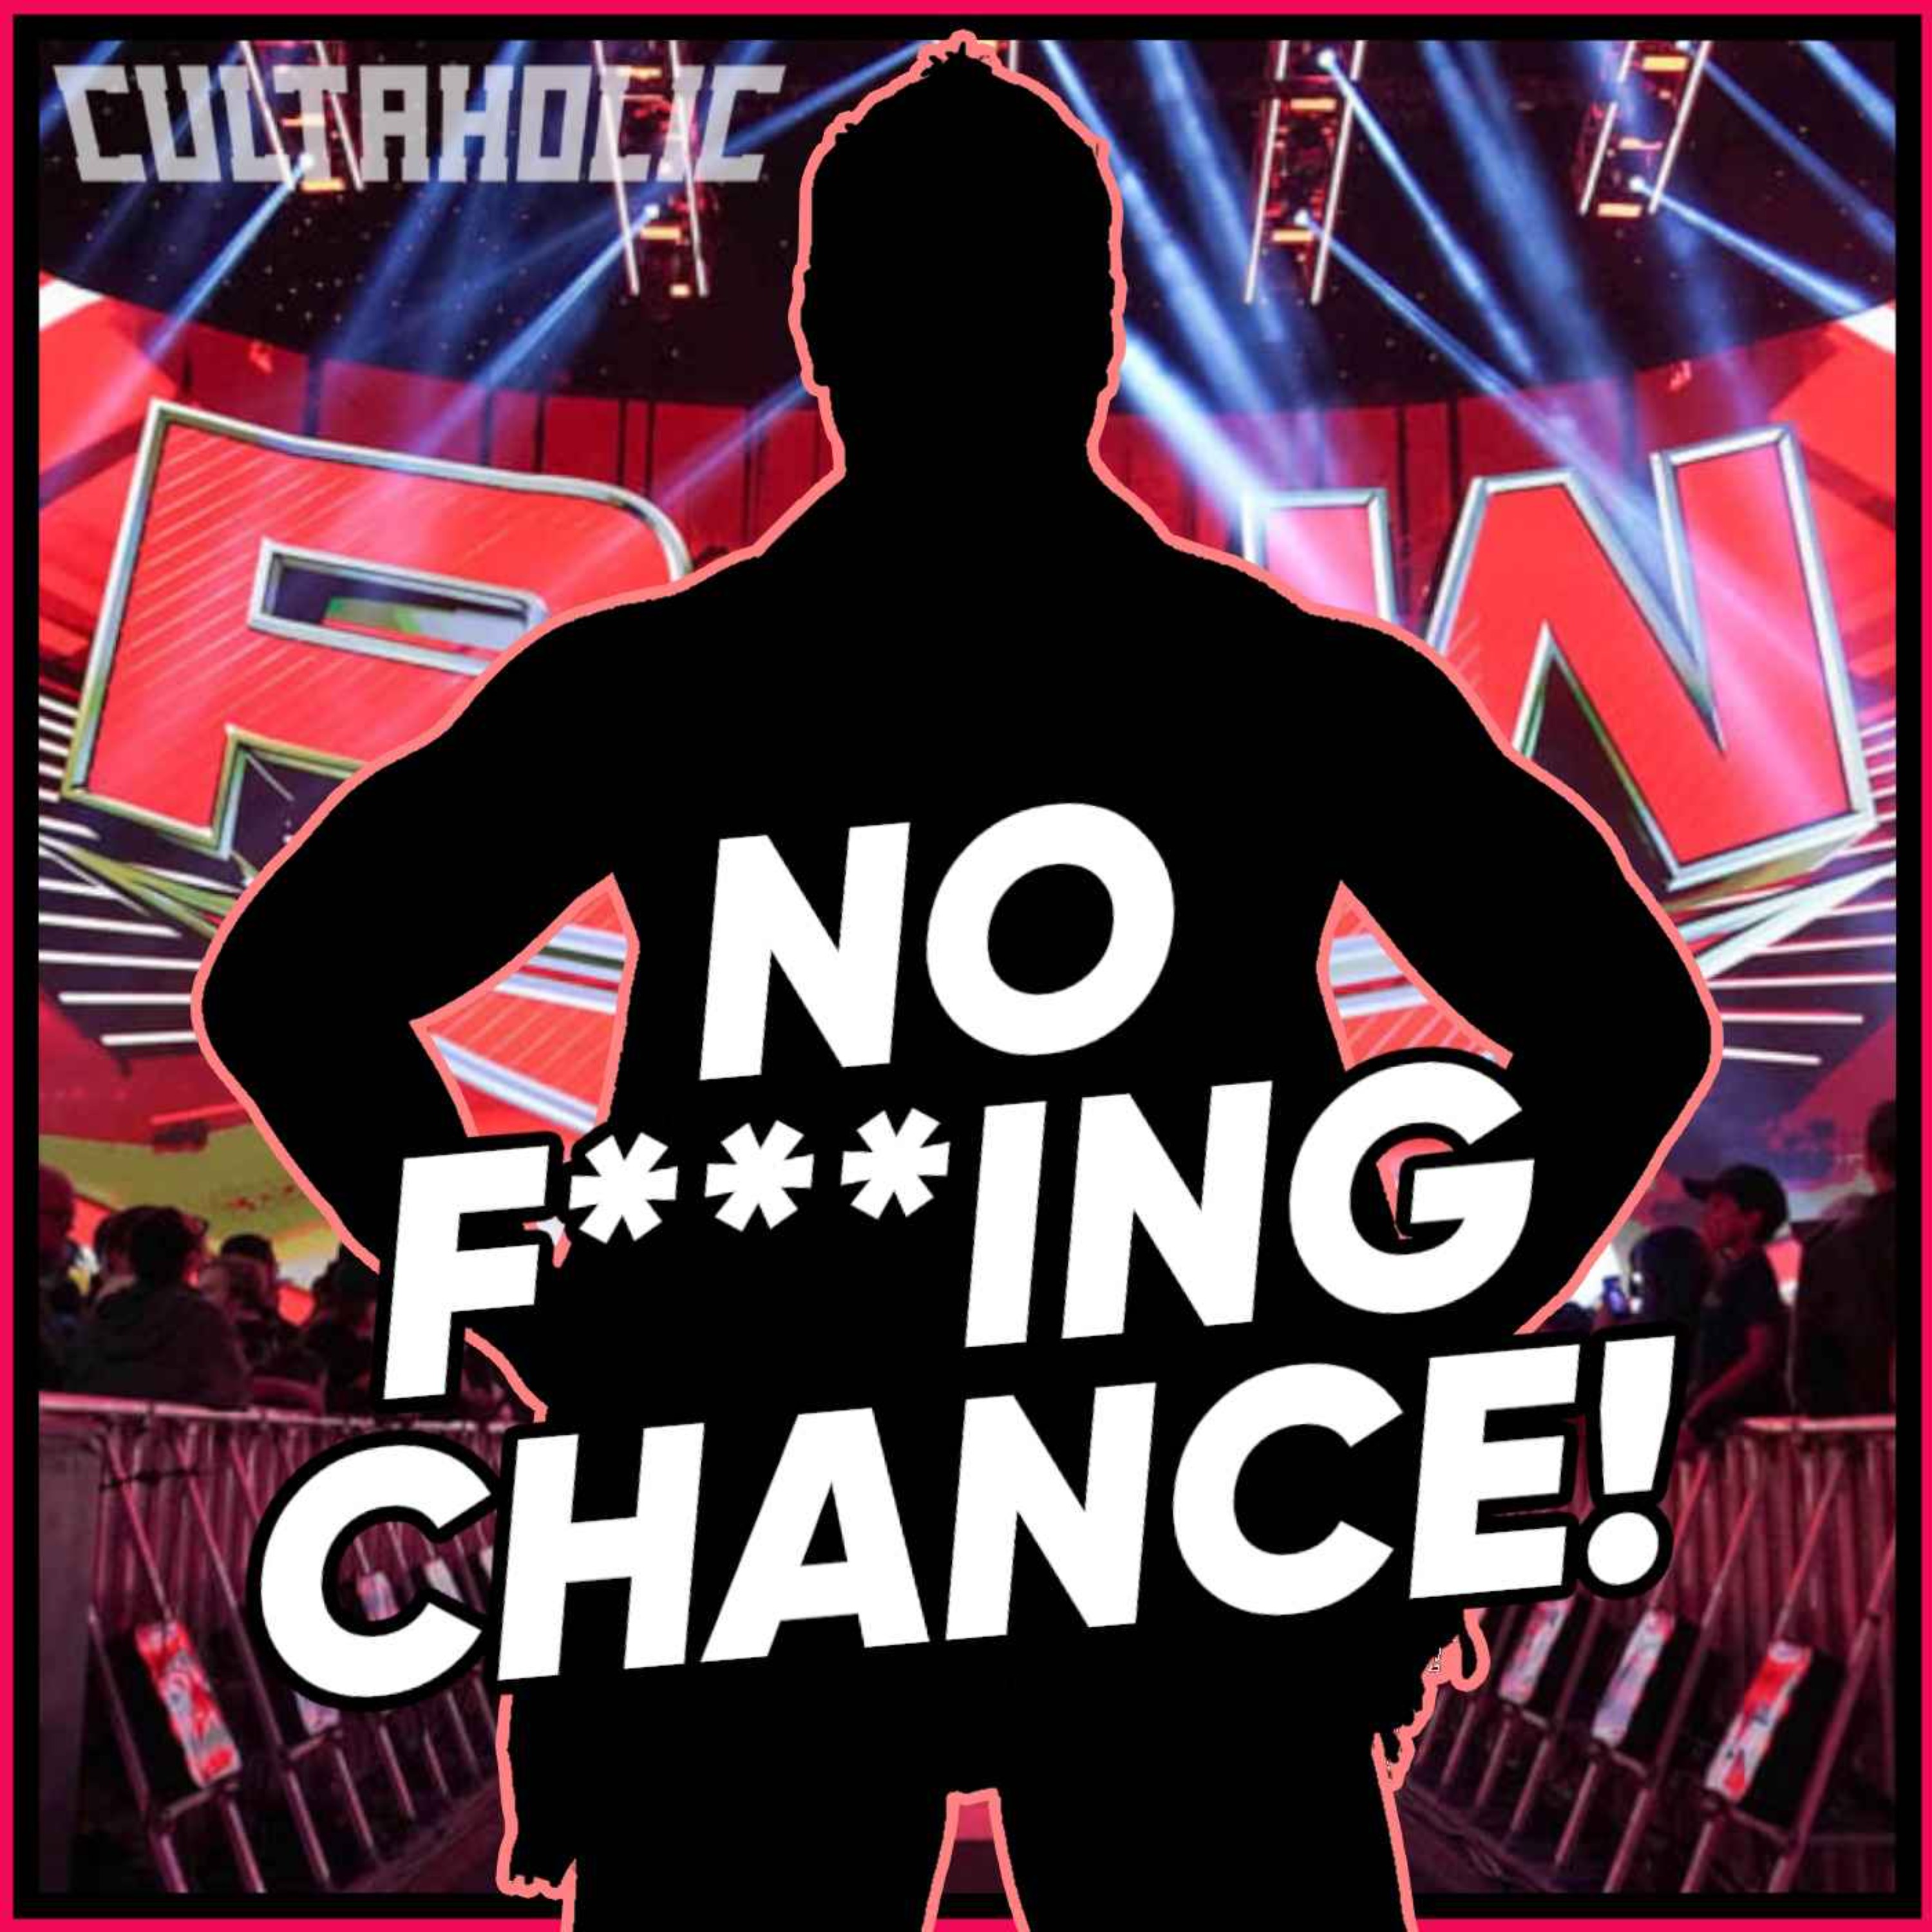 NEWS: Ex-WWE Star Has 